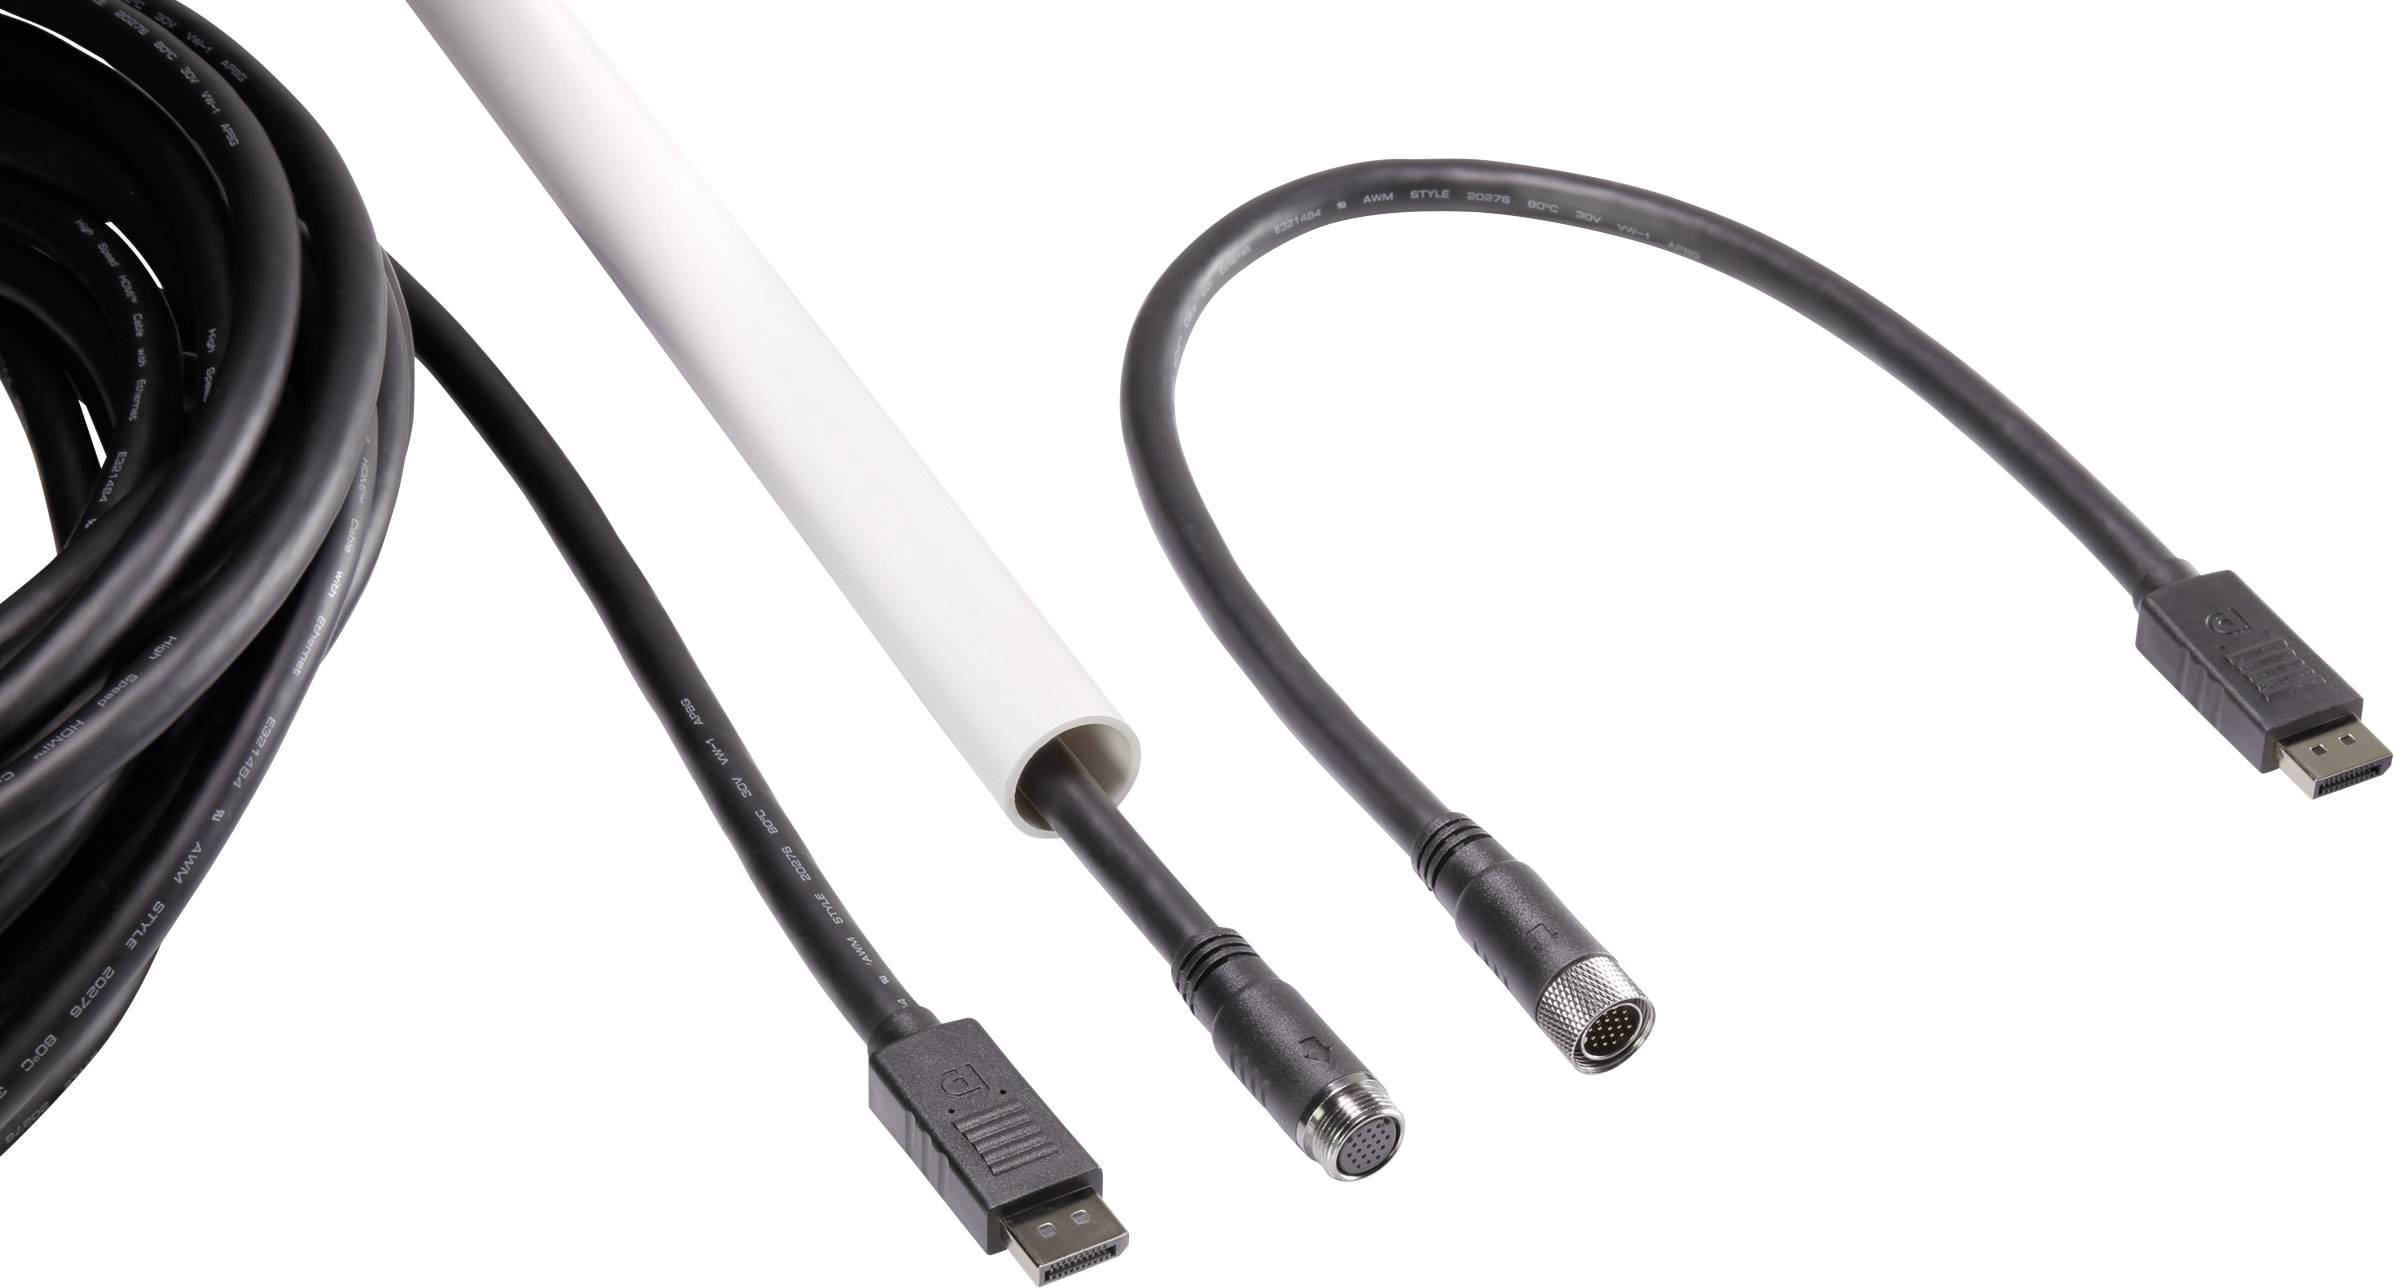 Renkforce Cable HDMI-A plug, HDMI-A 15.00 m Black for fitting, gold plated connectors HDMI | Conrad.com